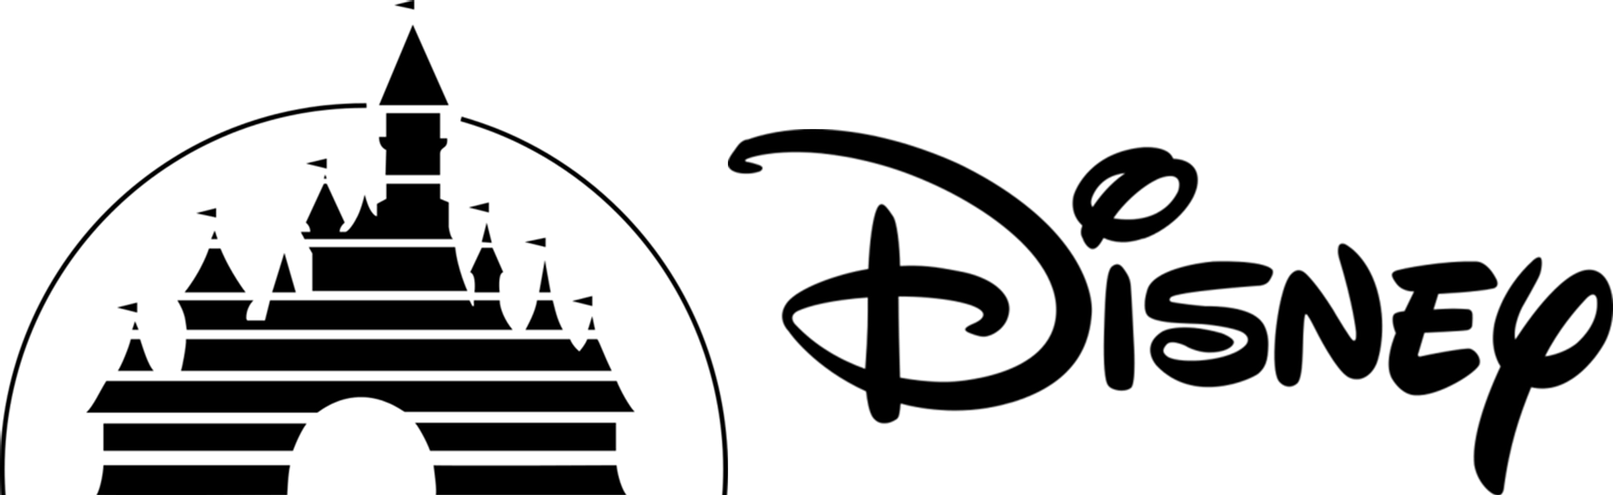 Логотип дисней (57 фото) .